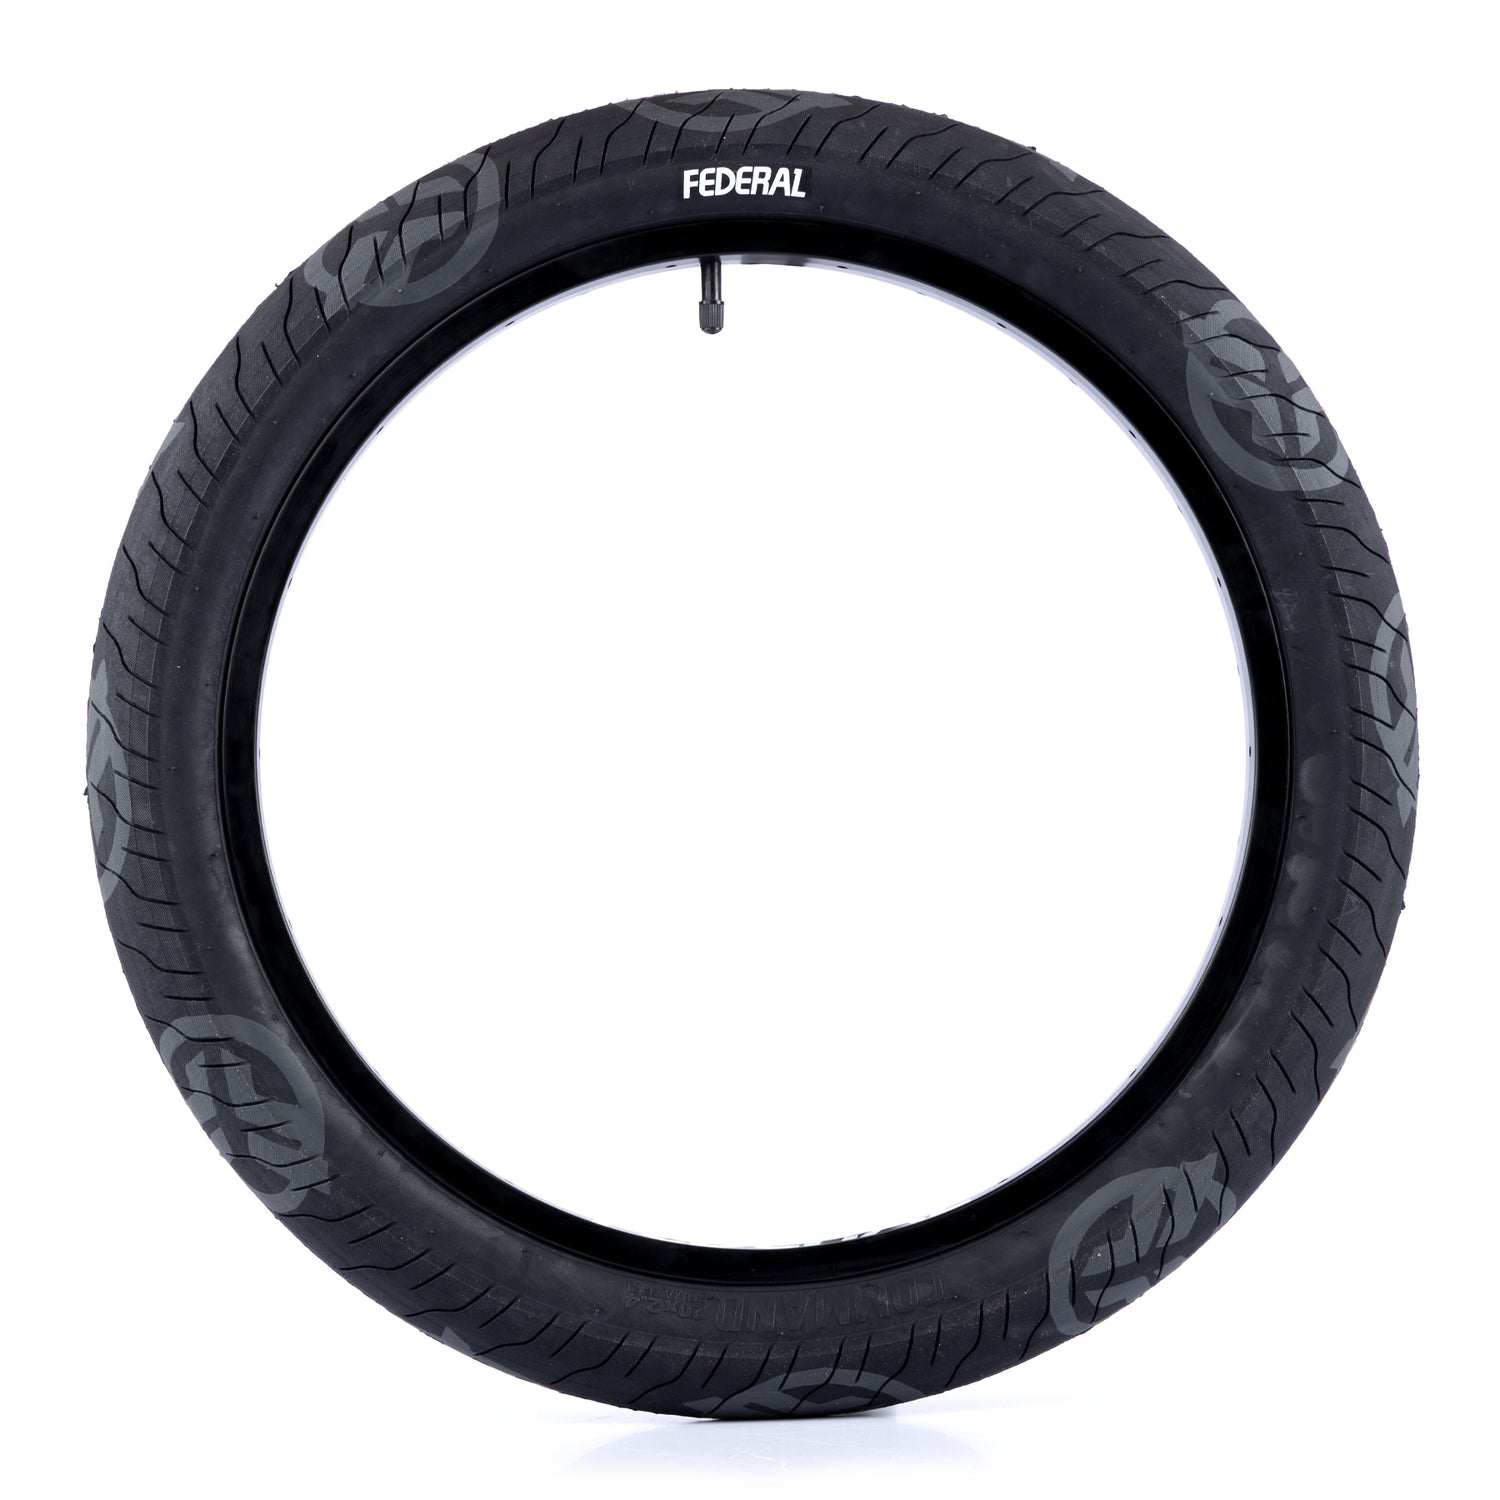 federal-command-tyre-black-grey-logo-2_1500x1500